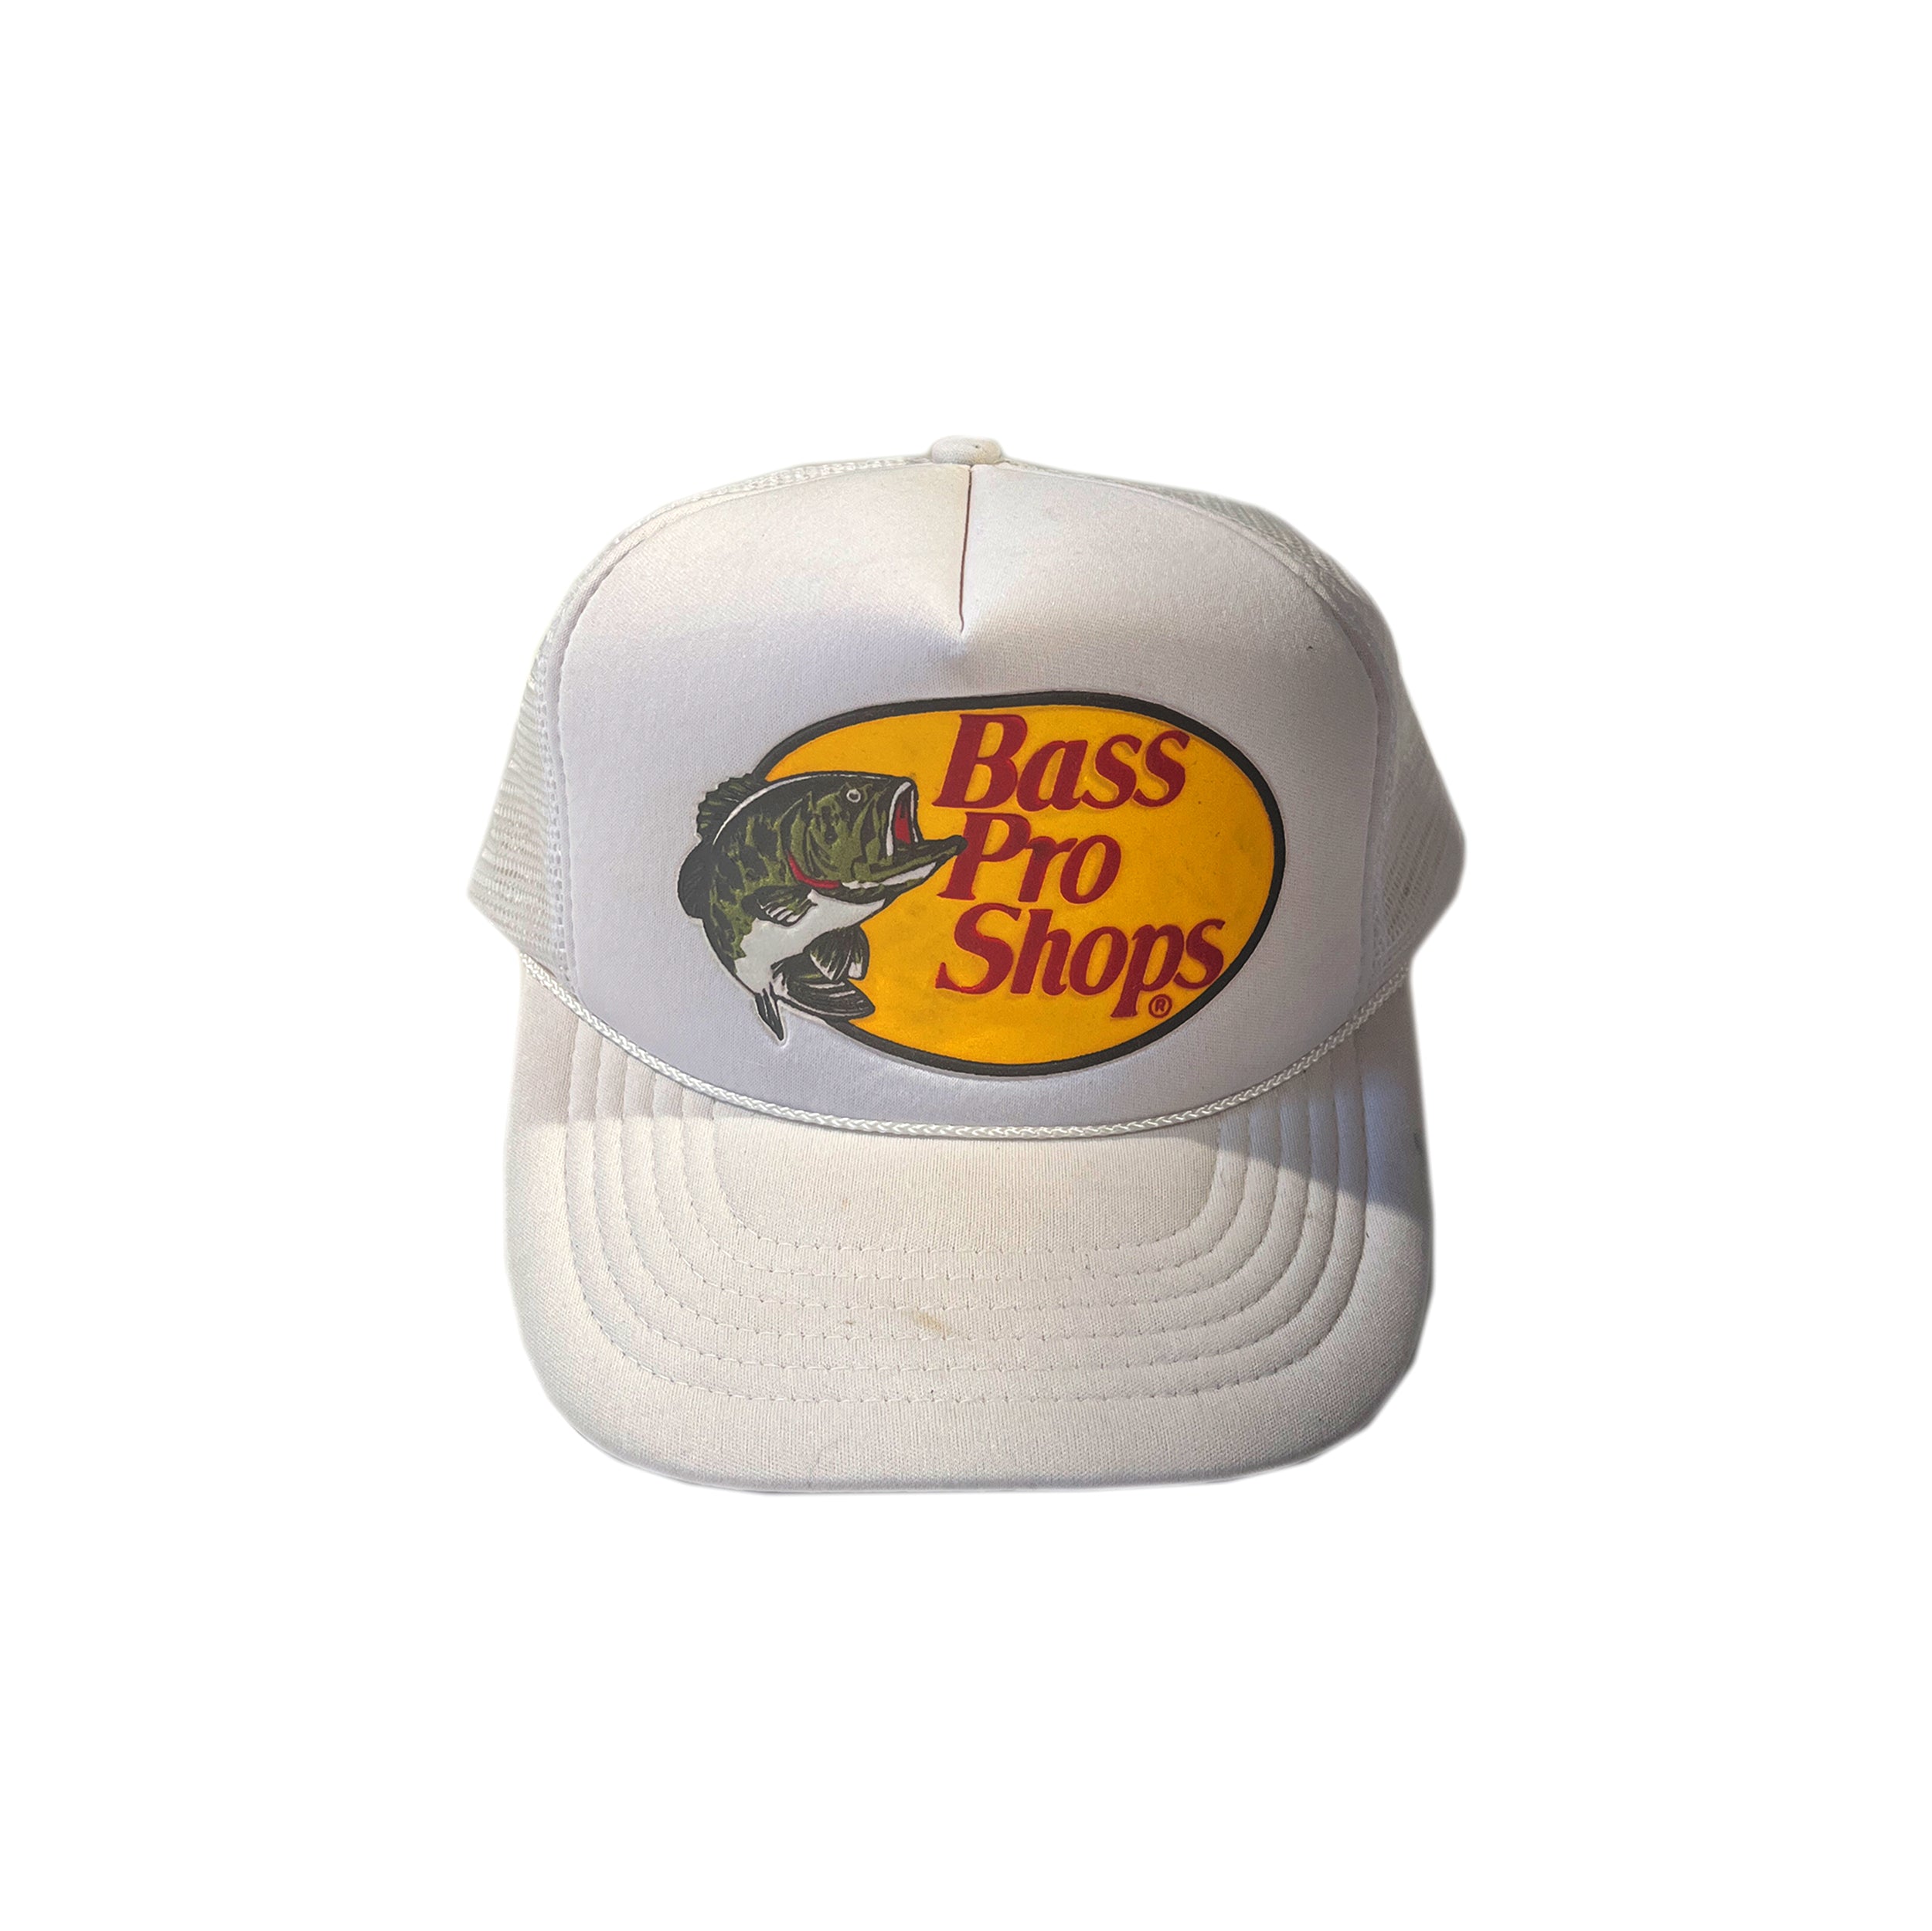 Bass Pro Shop Fishing hat Trucker Cap - Adjustable Kosovo